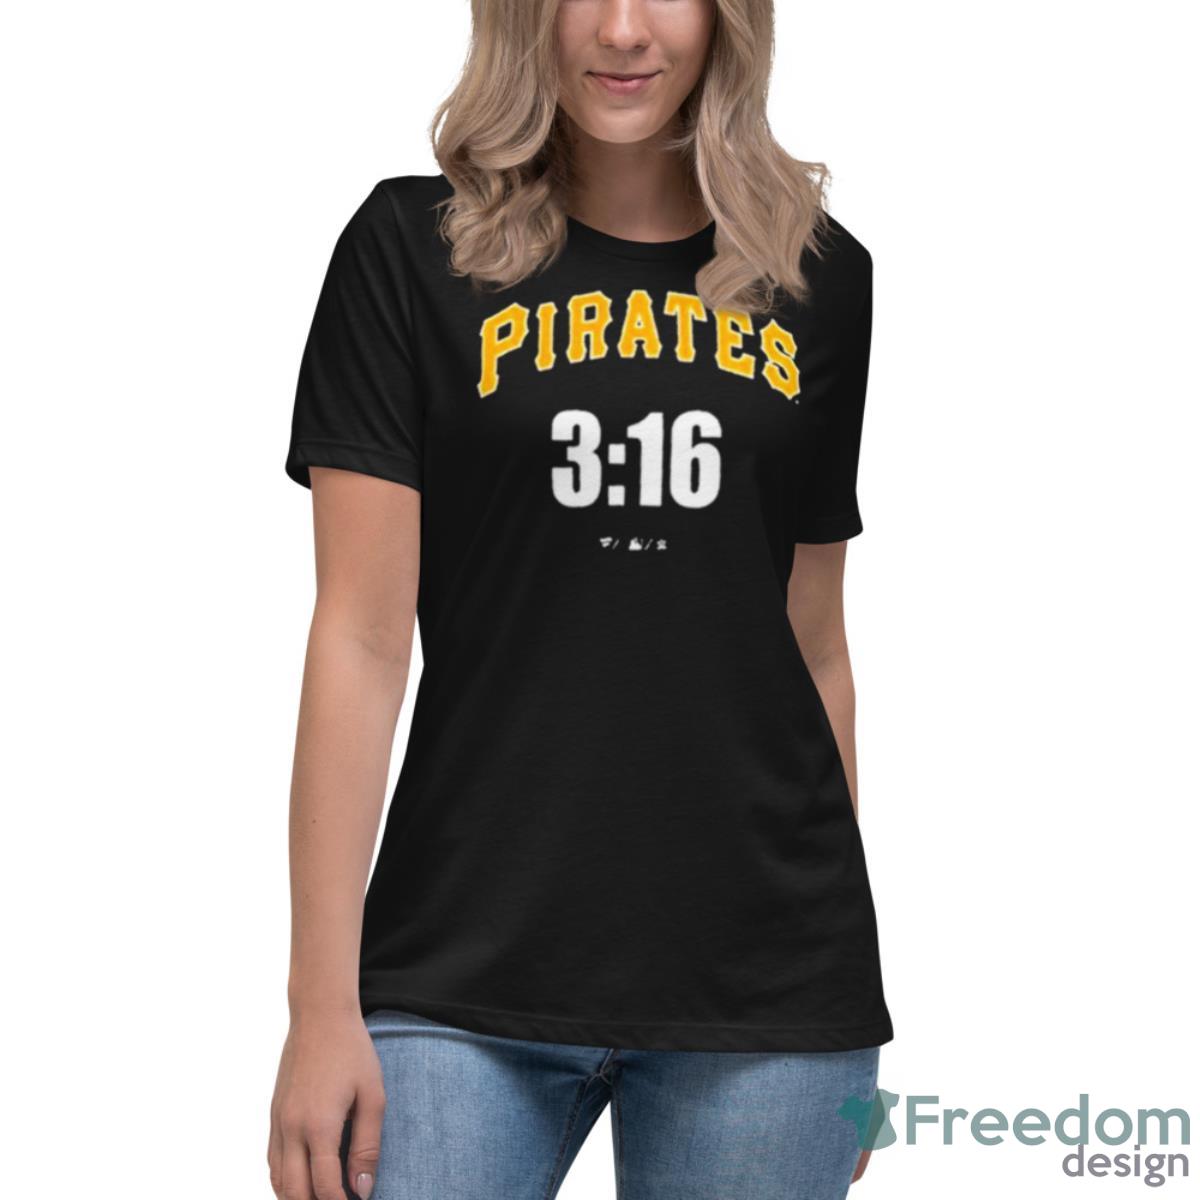 Stone Cold Steve Austin Pittsburgh Pirates Fanatics Branded 3 16 shirt